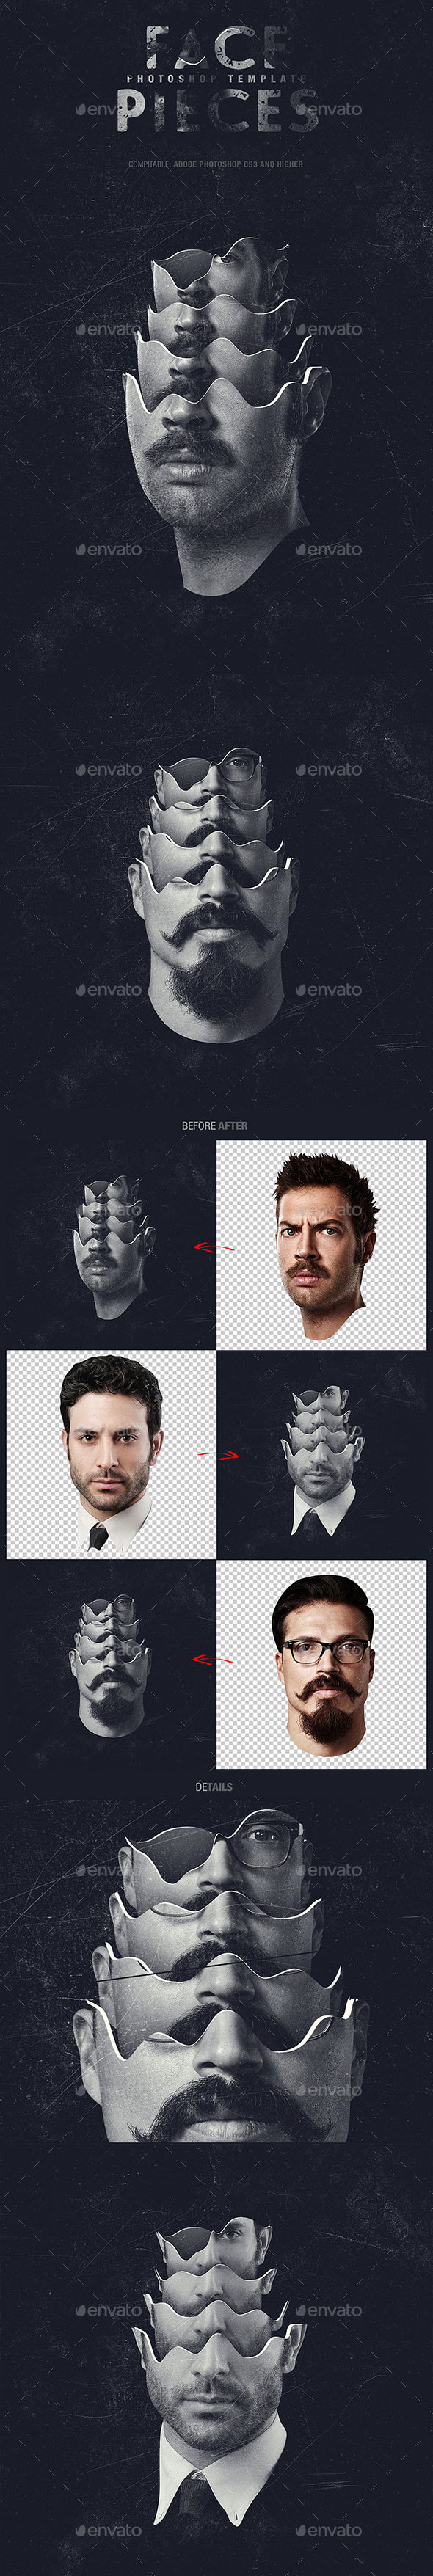 Face Pieces Photoshop Template